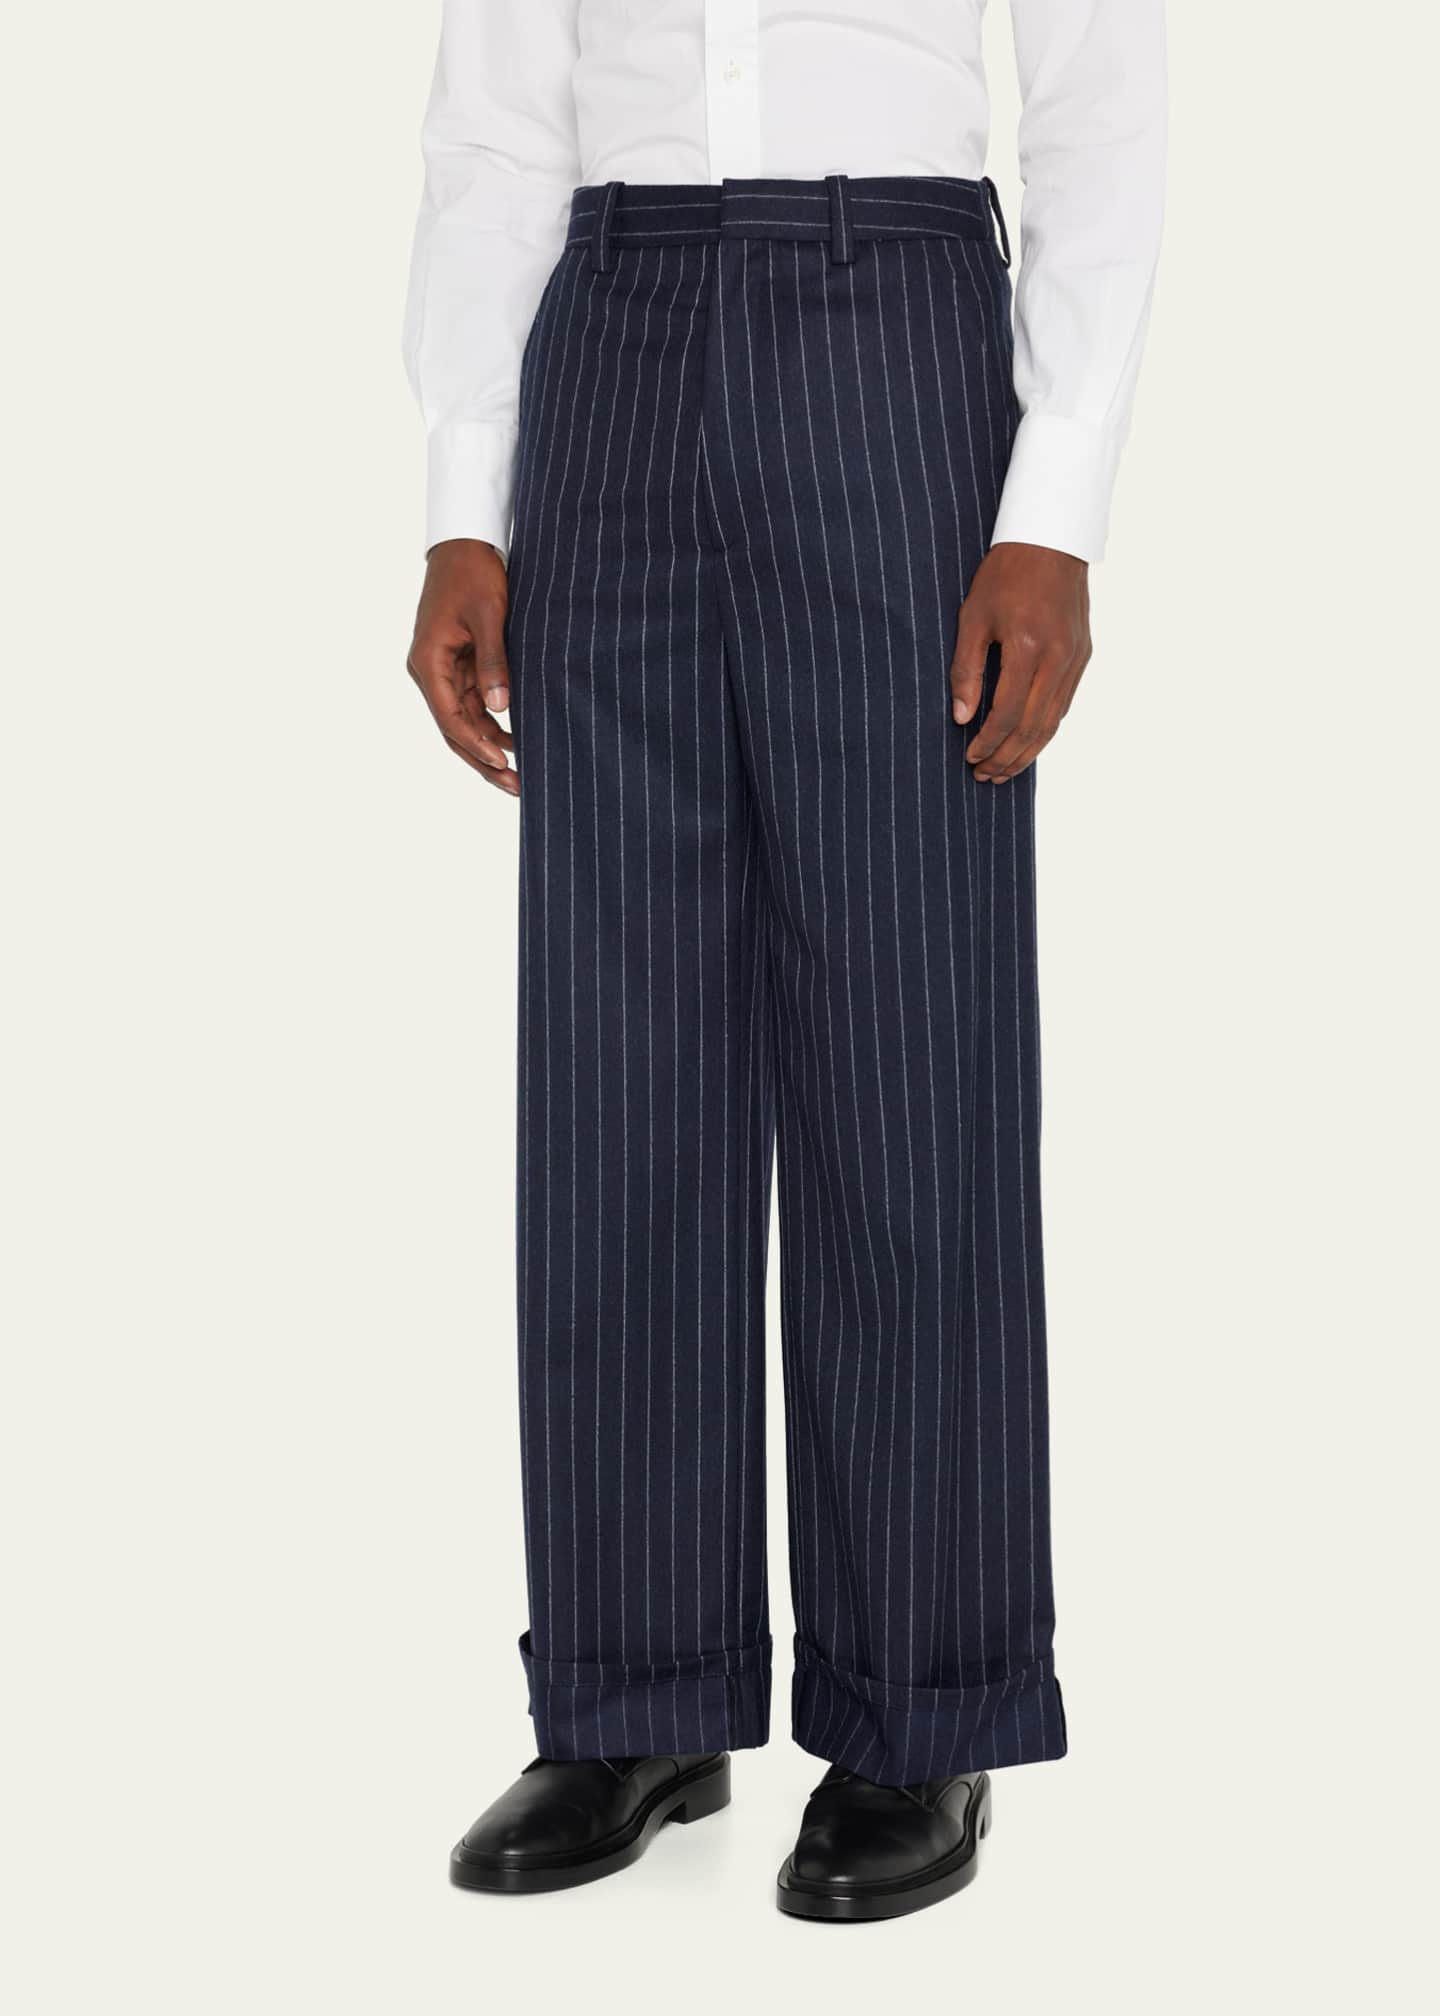 Kenzo Men's Pinstripe Wool Trousers - Bergdorf Goodman